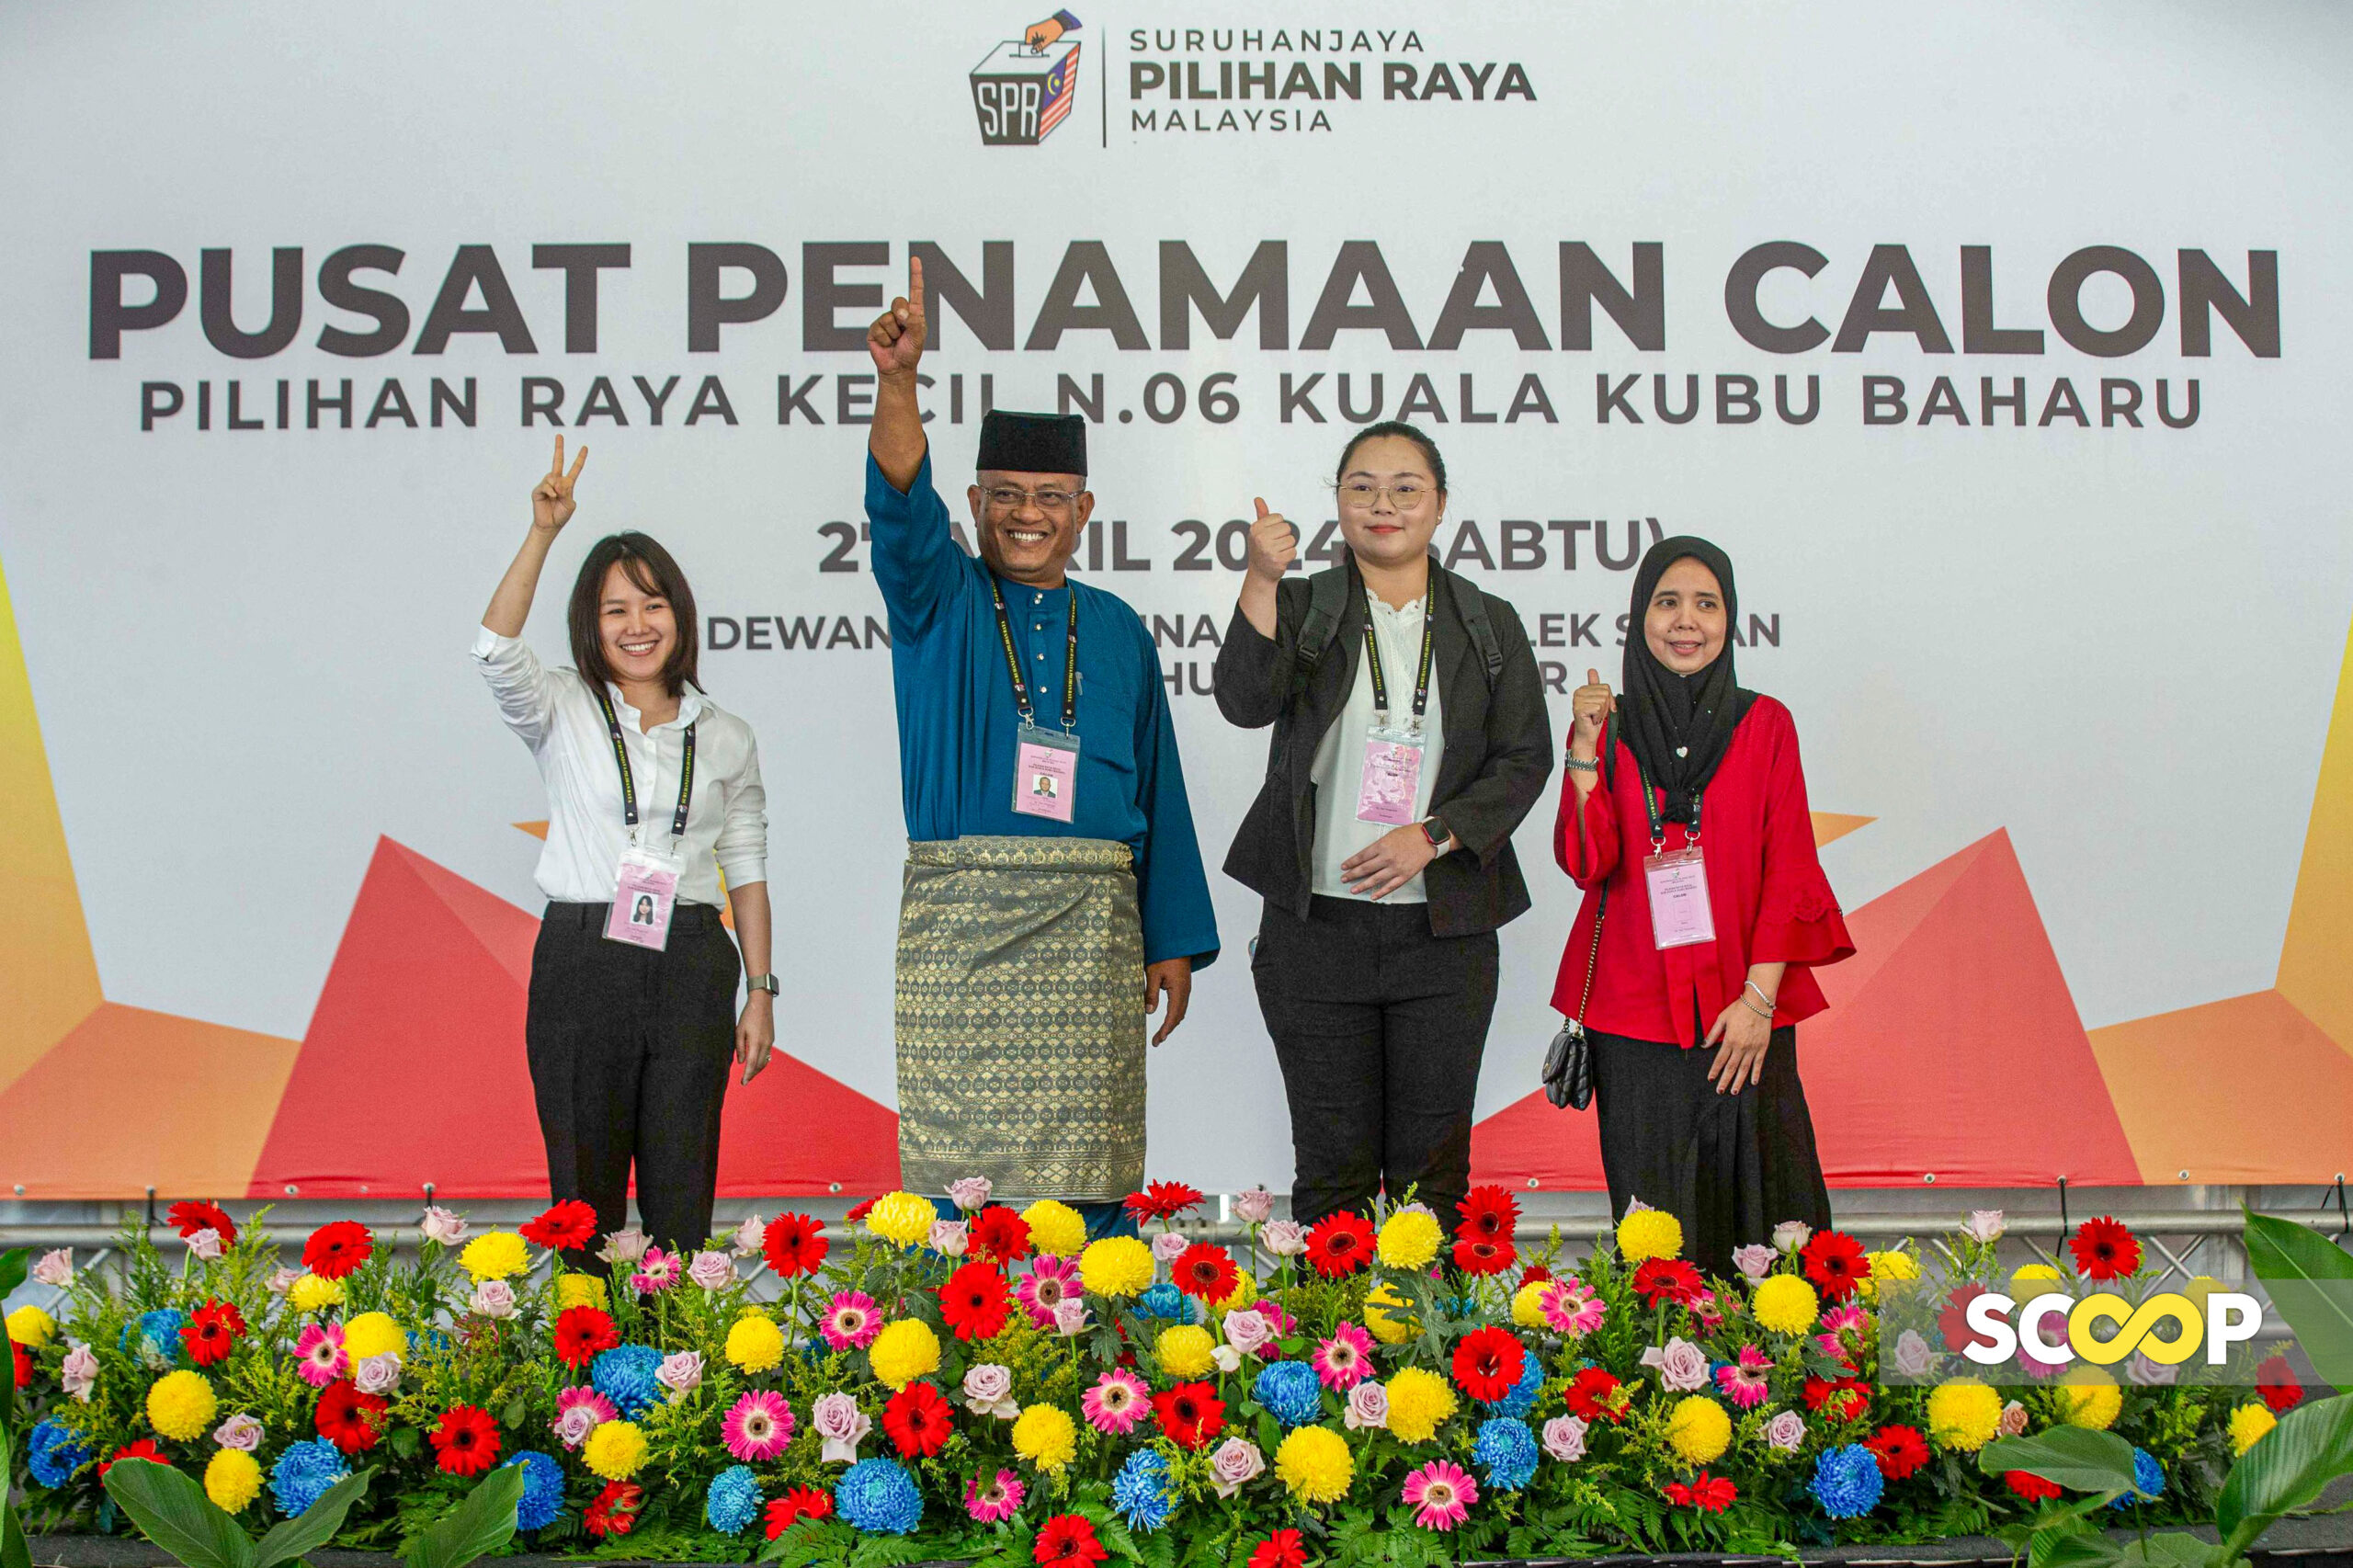 Kuala Kubu Baharu voters will choose from four candidates